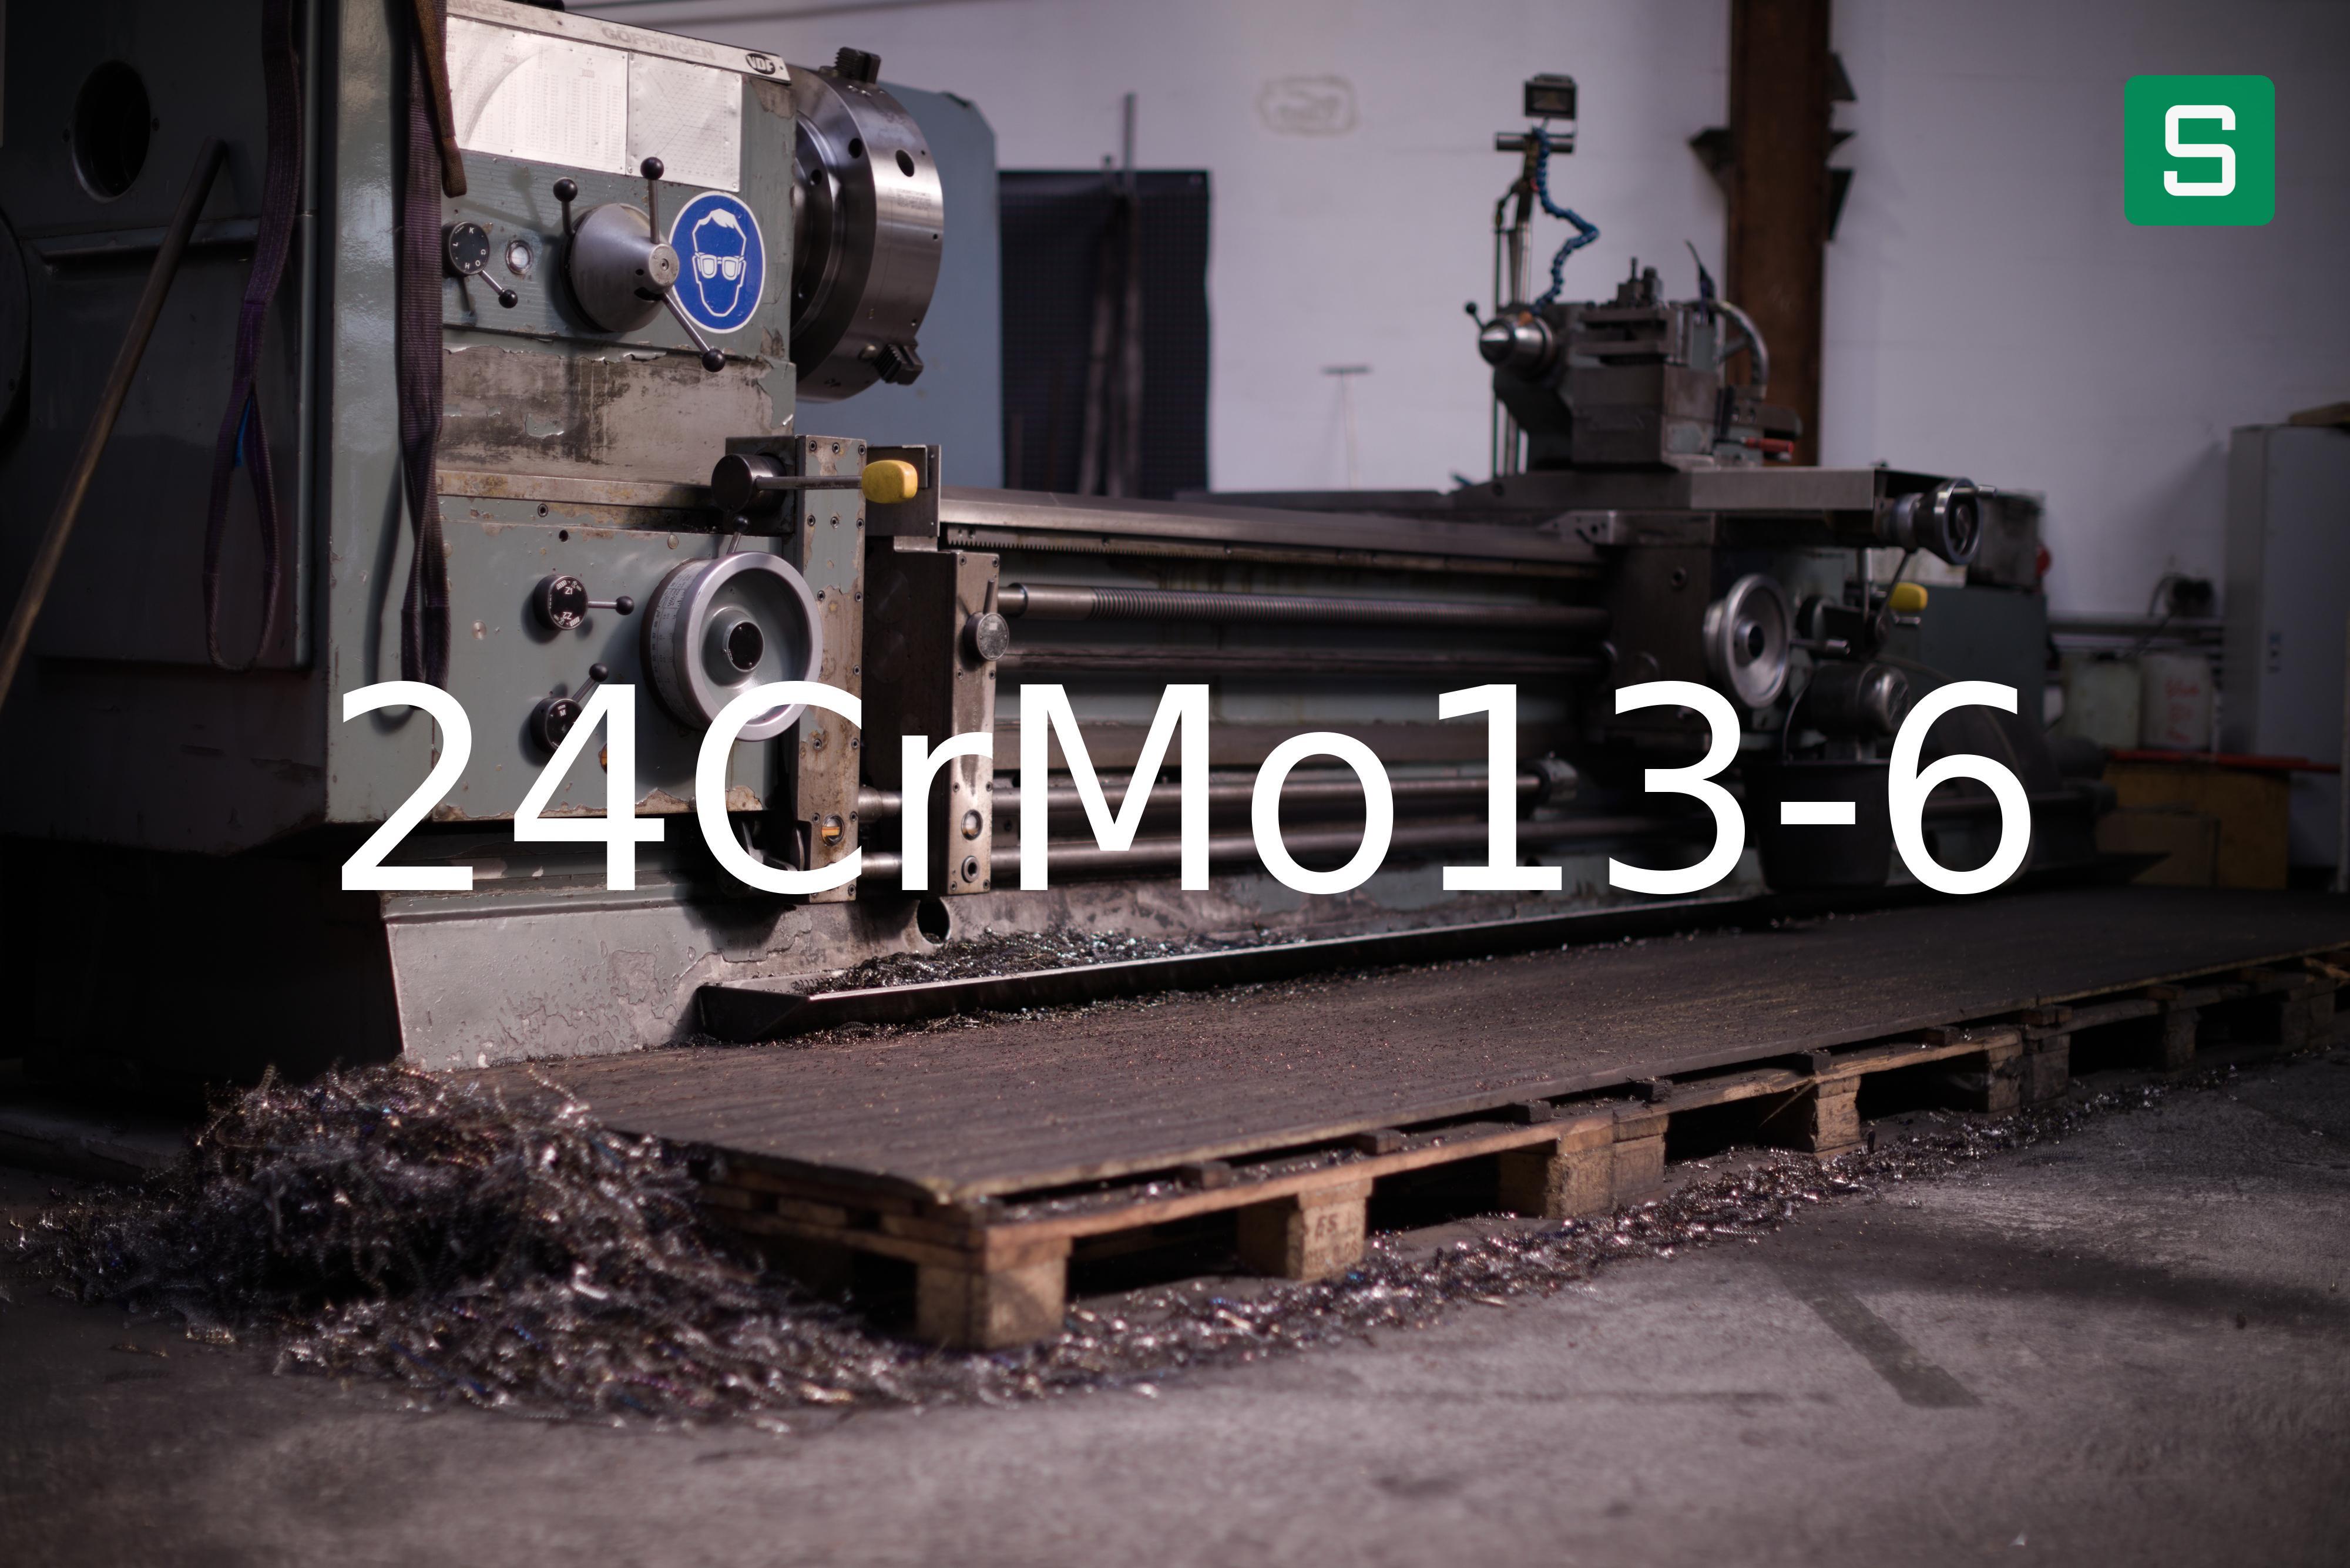 Steel Material: 24CrMo13-6